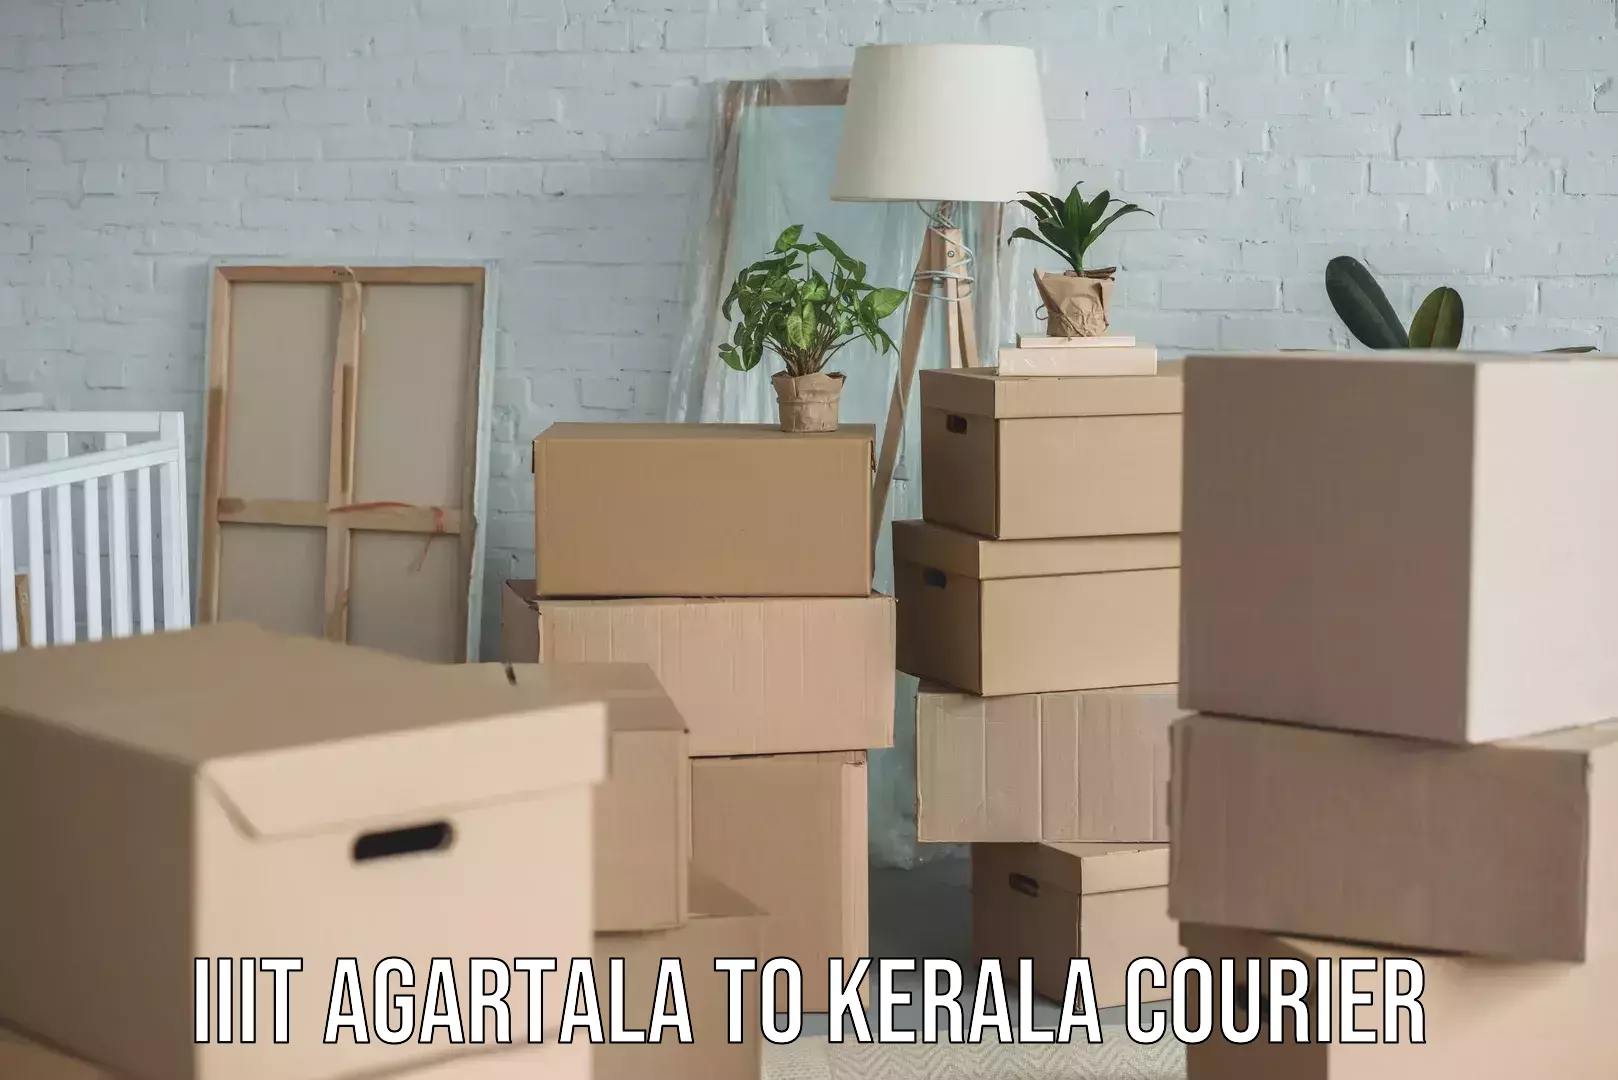 Business courier solutions IIIT Agartala to Kerala